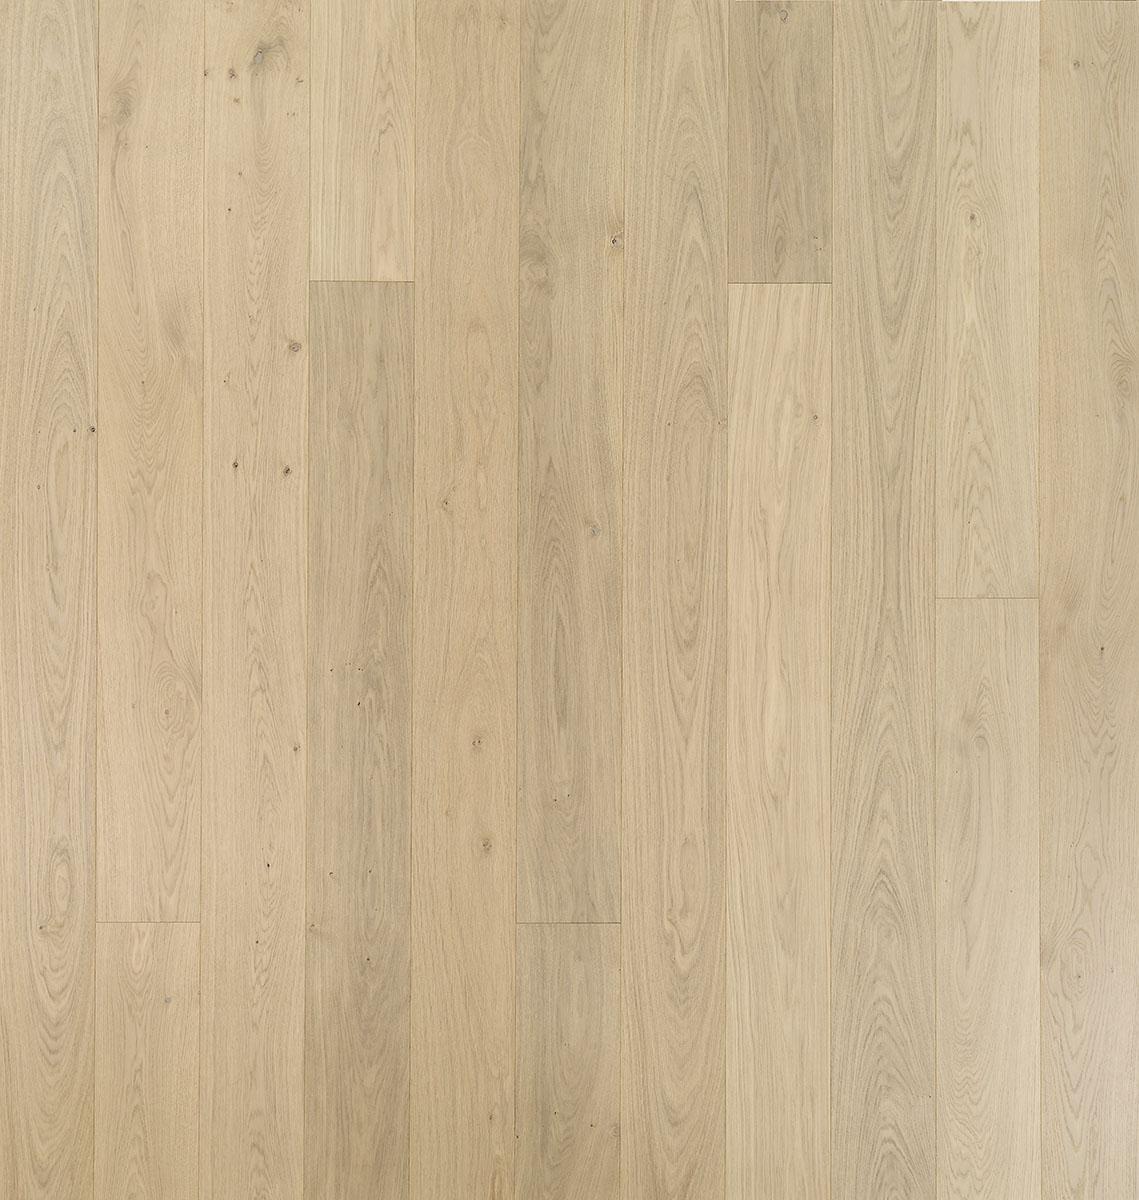 Timberwise-parketti-puulattia-wooden-floor-parquet-Tammi-Oak-sky-white